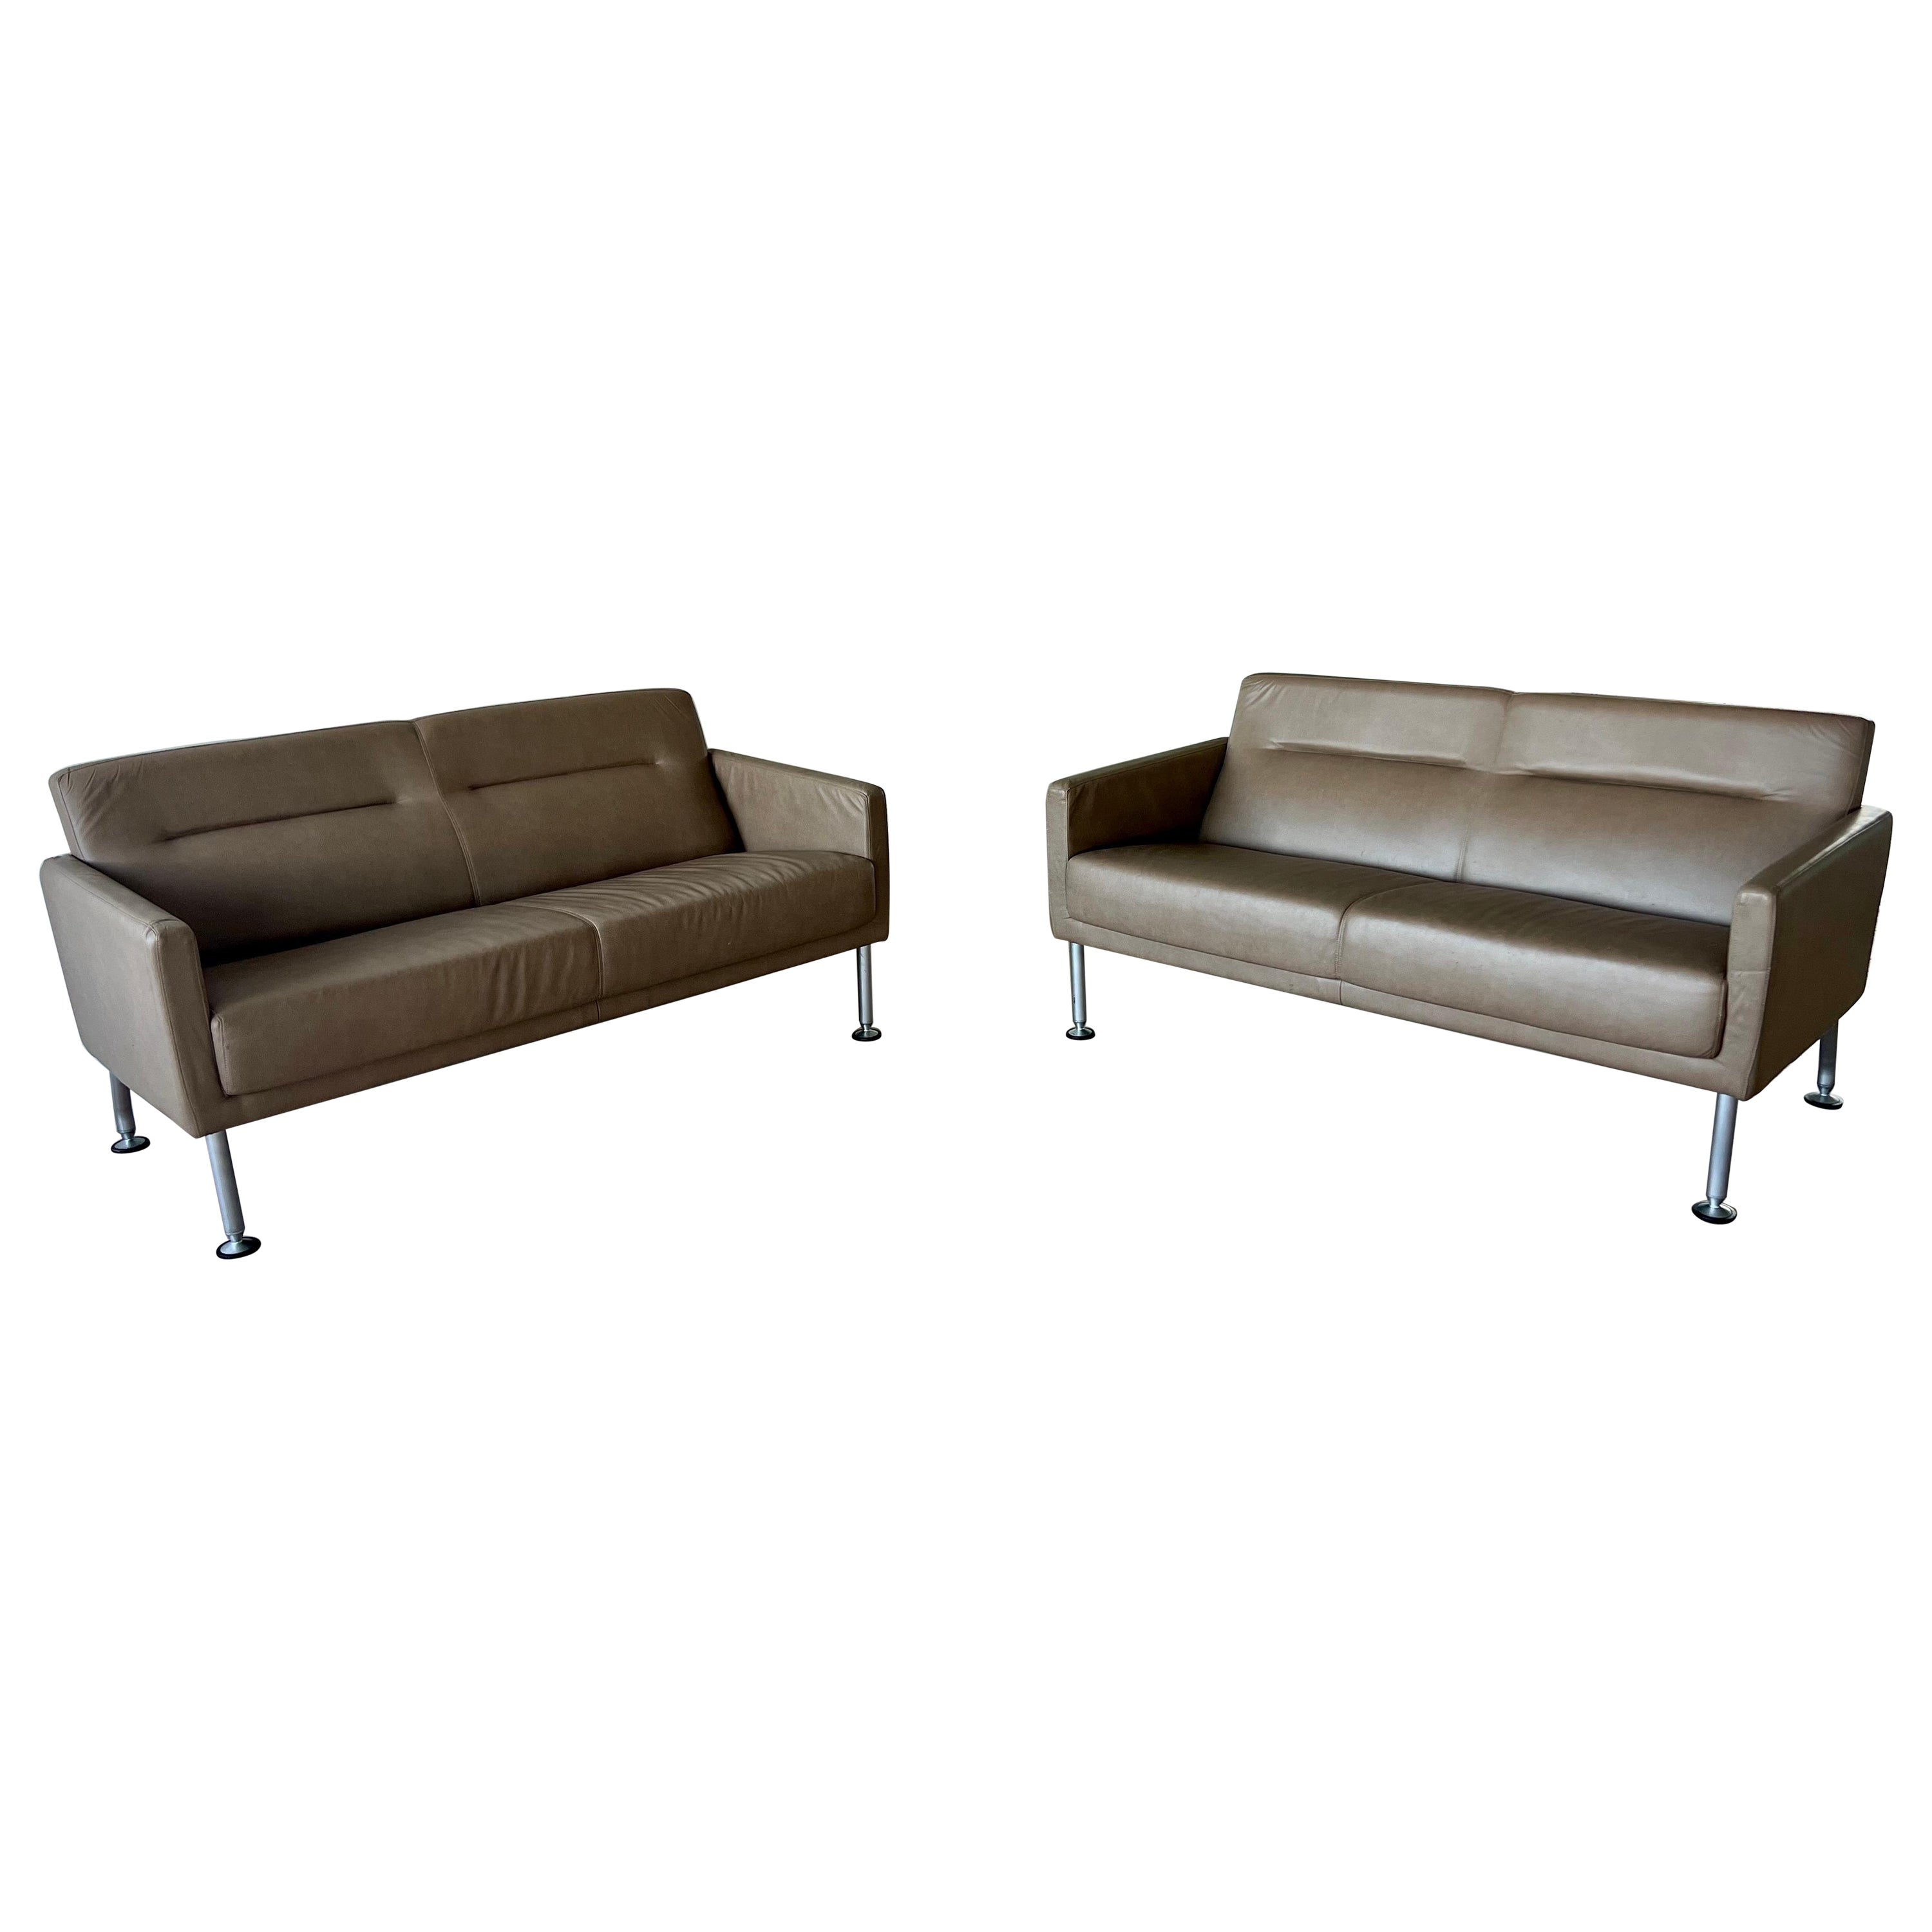 Pair of Highback-Sidewalk Two-Seat Sofa by Brayton International